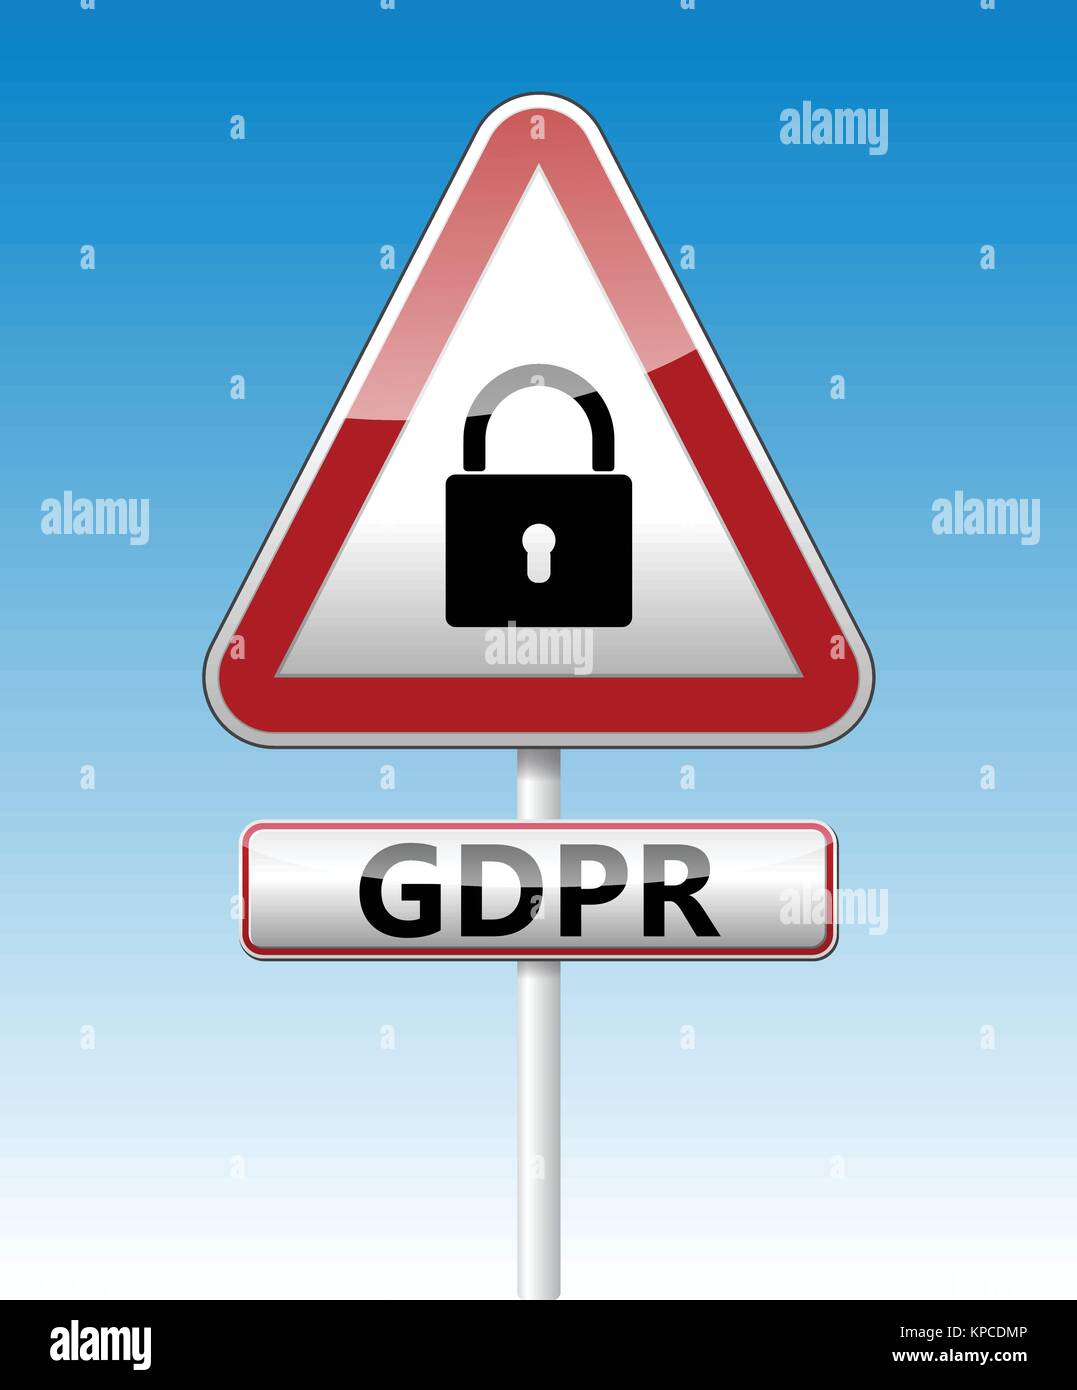 GDPR - European General Data Protection Regulation. Stock Vector